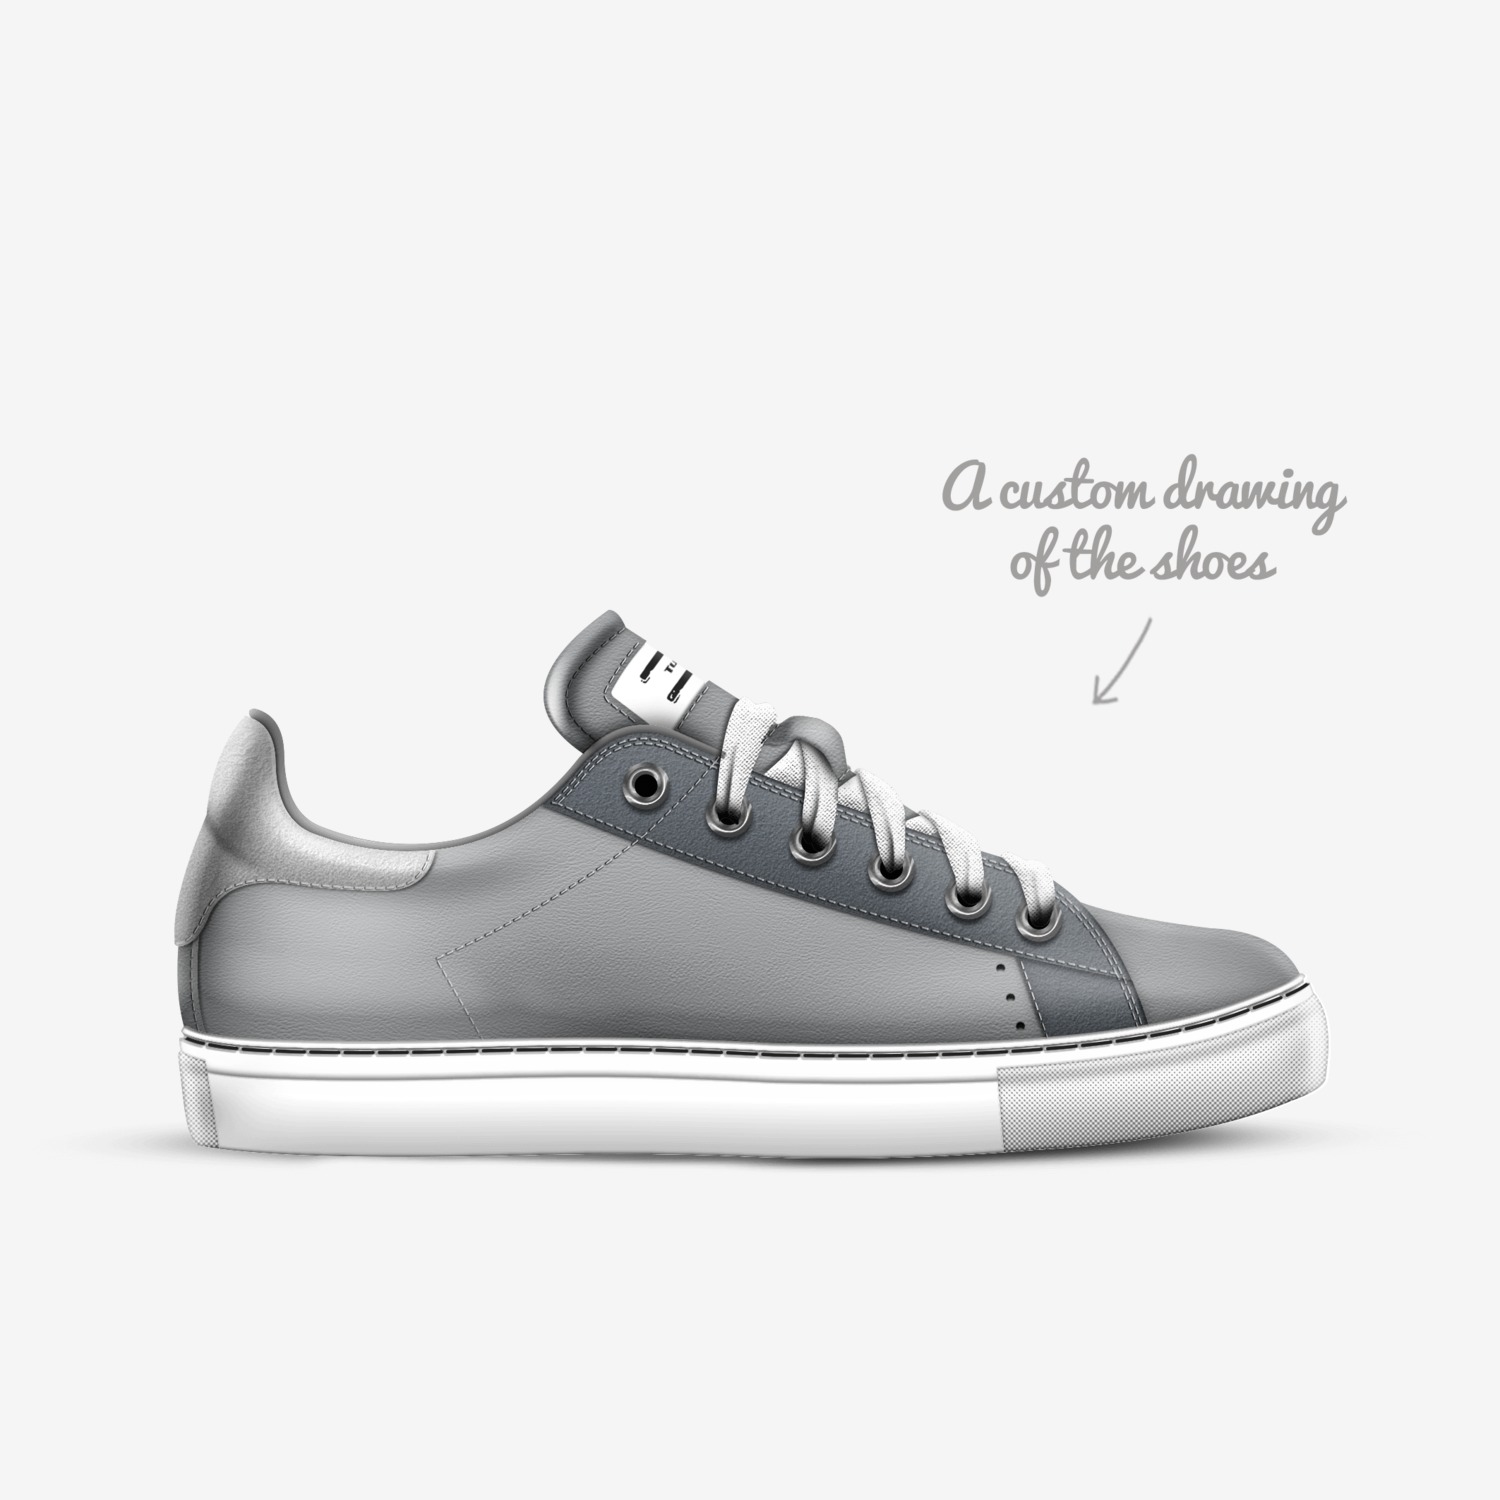 Tuts | A Custom Shoe concept by Ragnar Kuurmaa